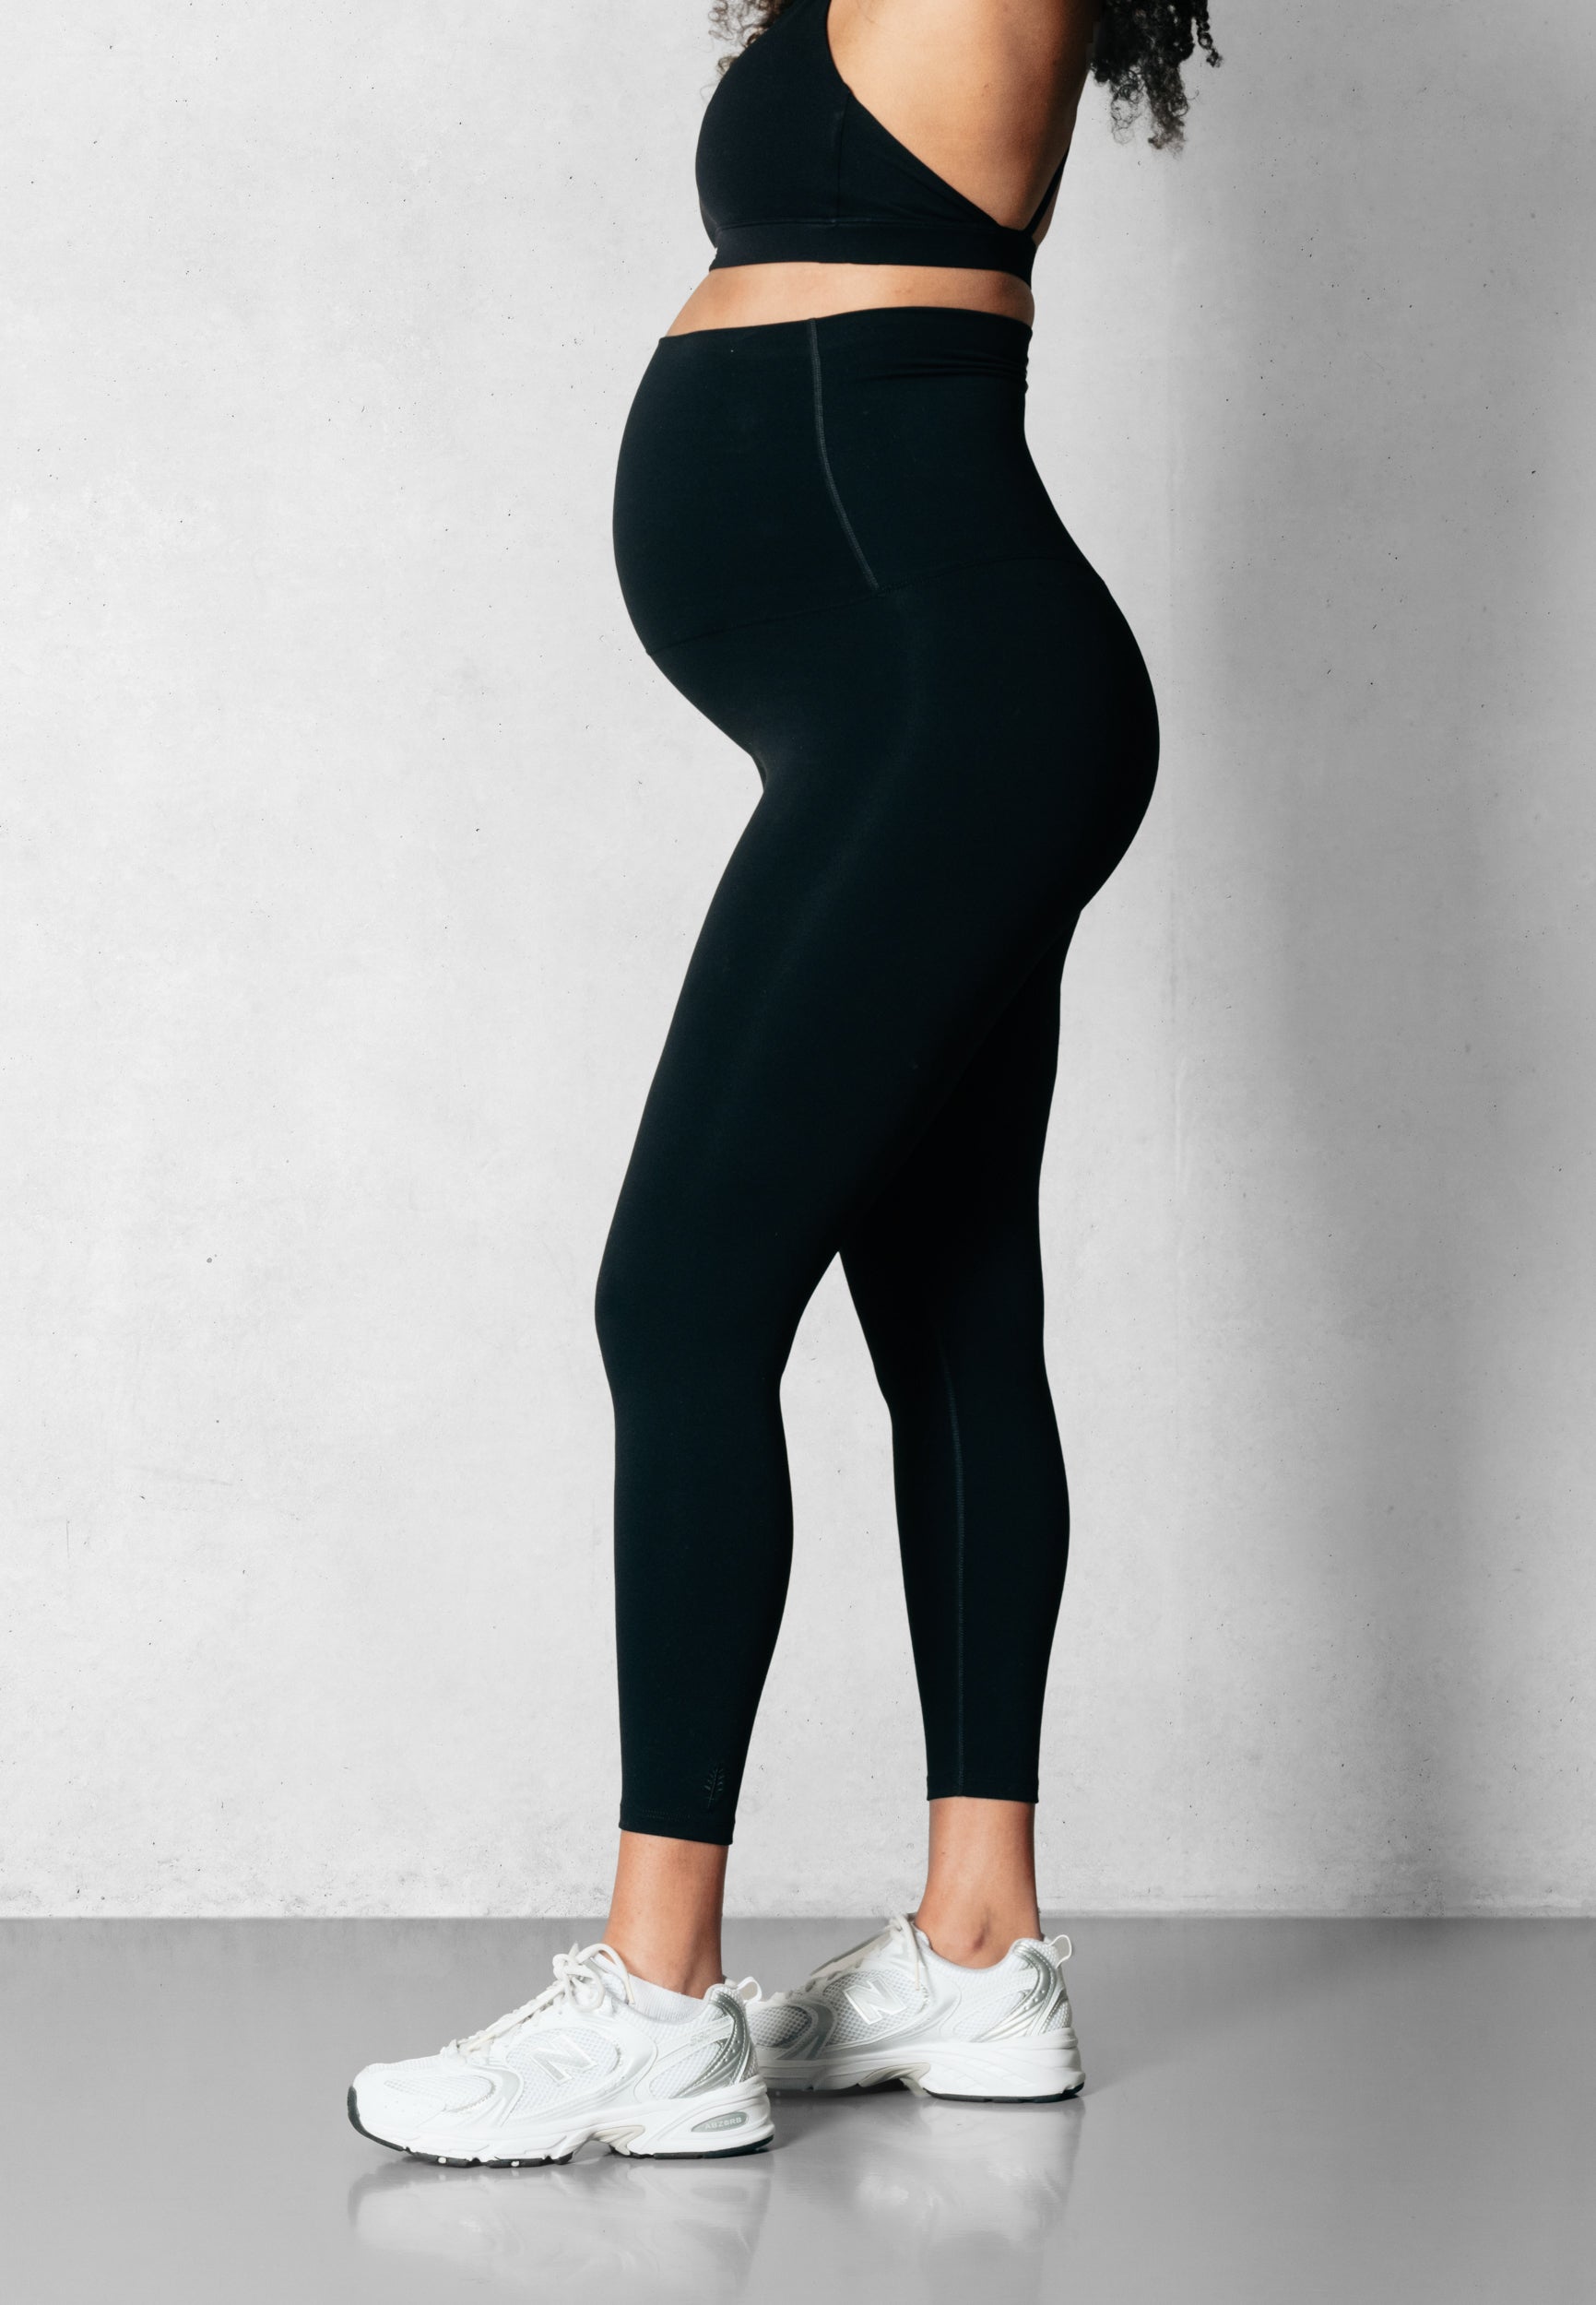 V-Shape Pregnancy Tights - Extra High Waist - Black